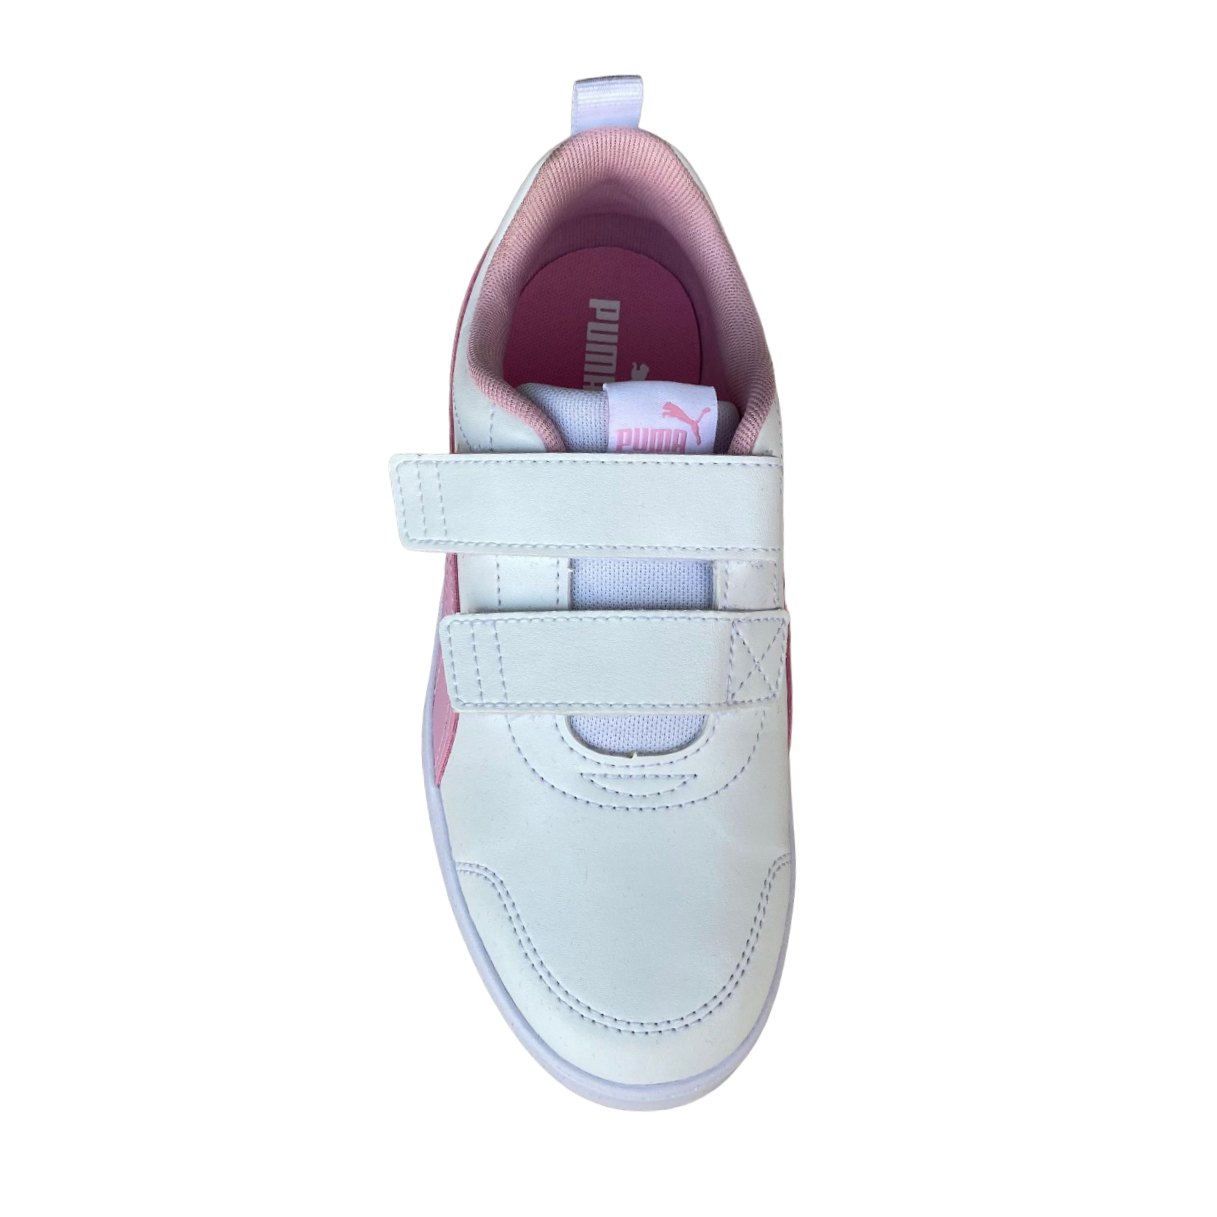 Puma sneakers da bambina Courtflex v2 V PS 371543 11 white-pale pink